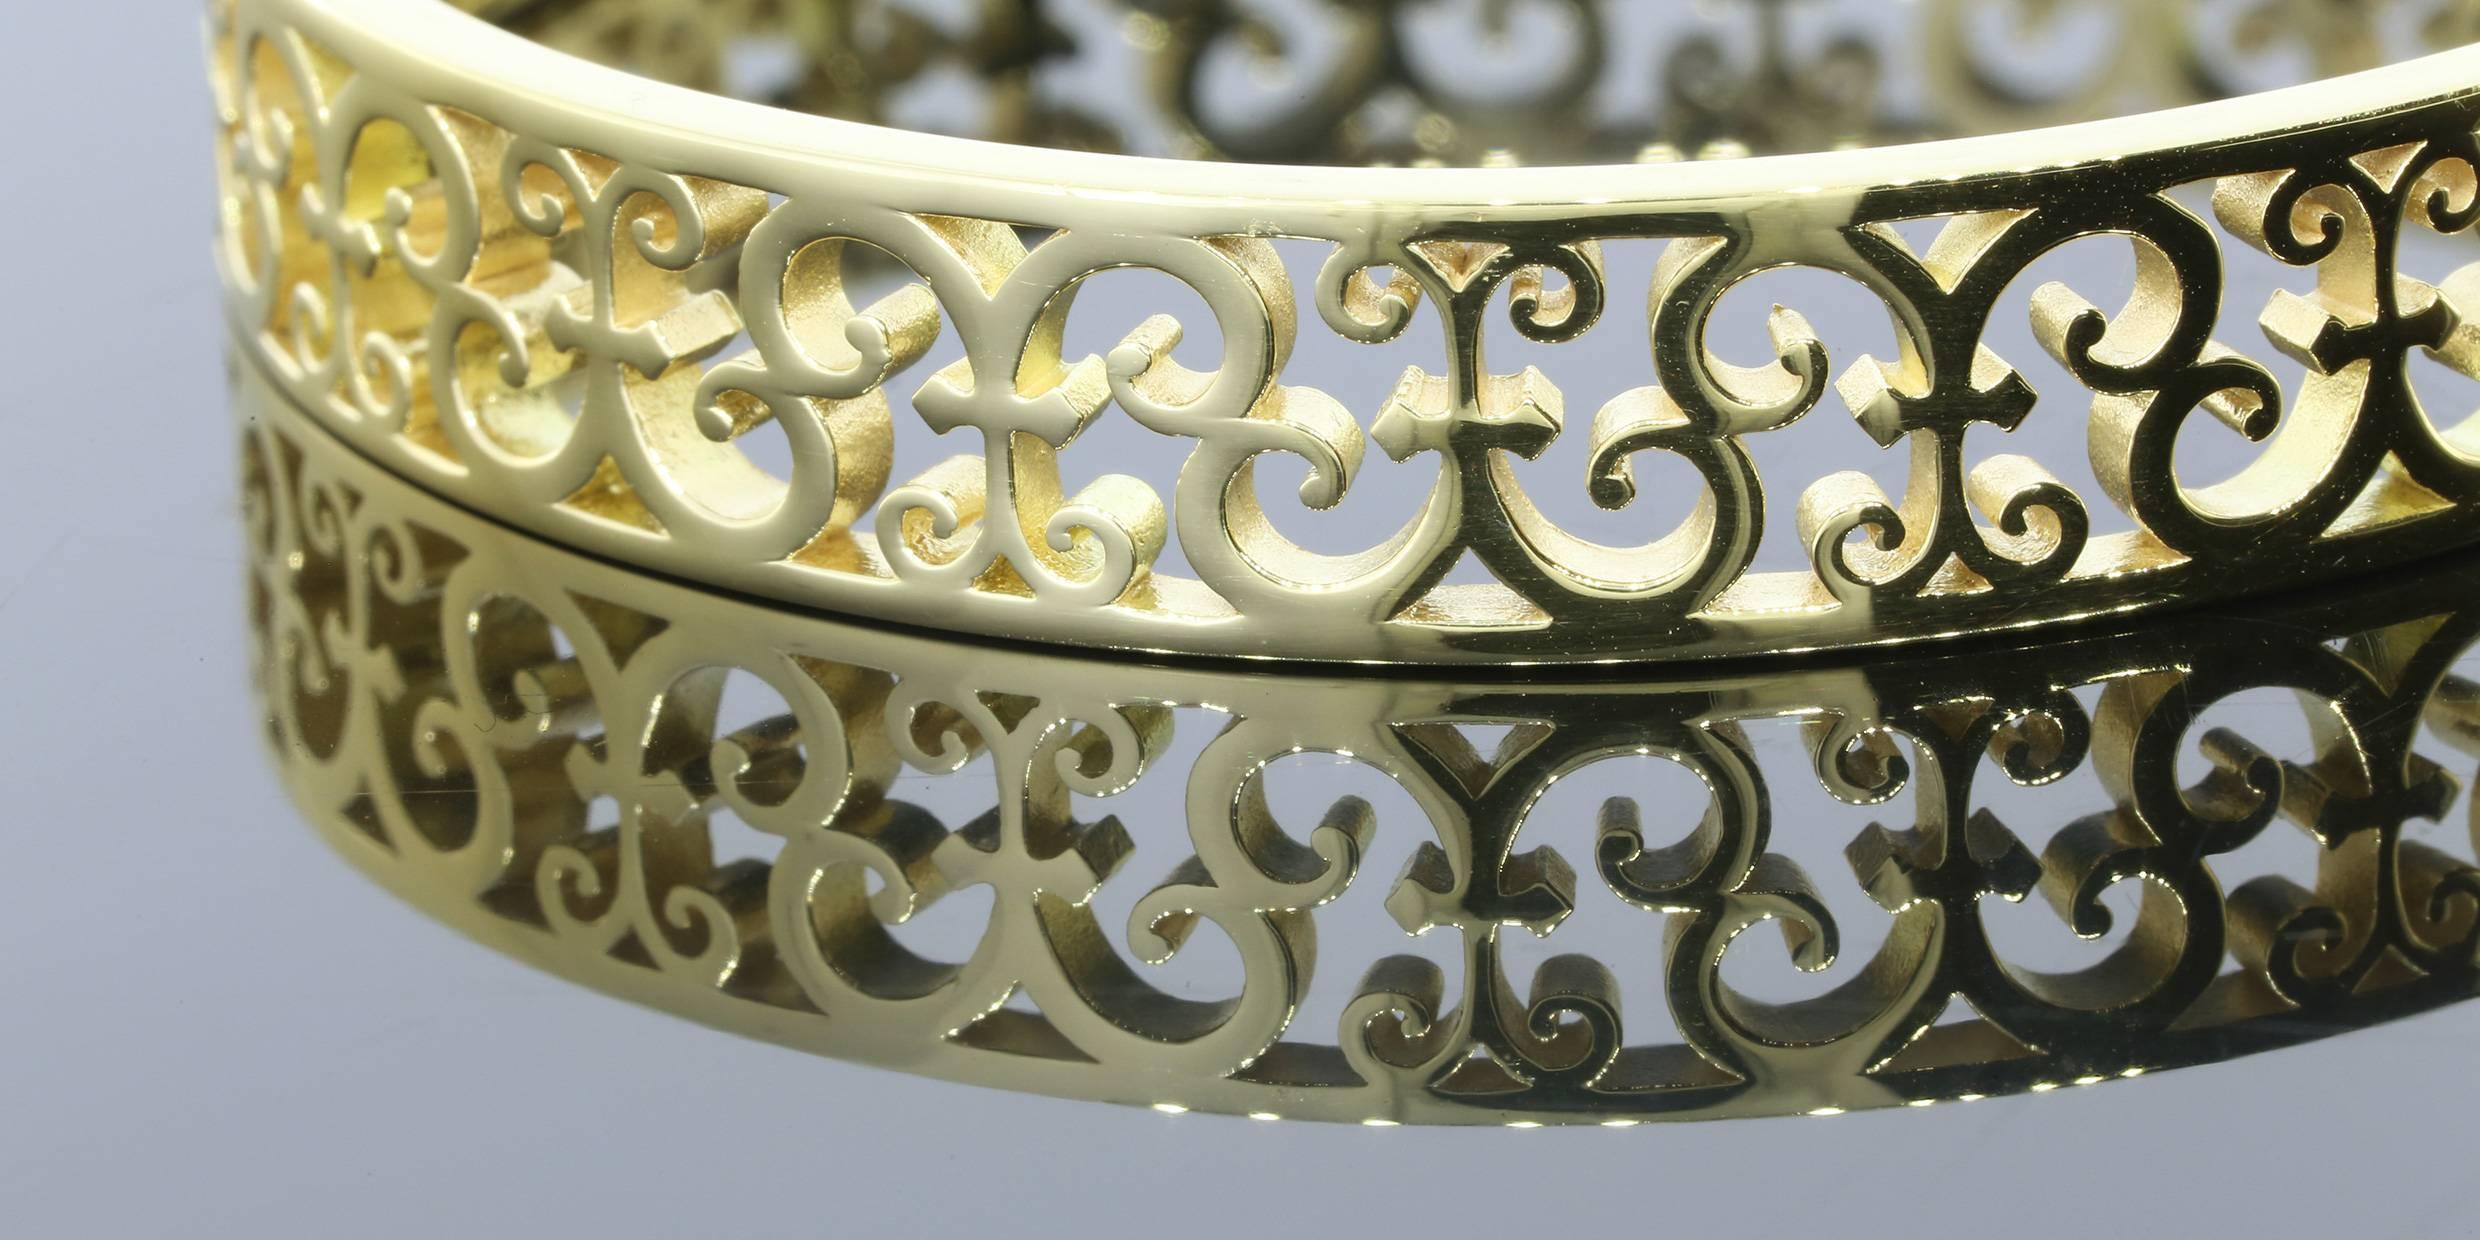 Women's Tiffany & Co. Enchant gold Bangle bracelet